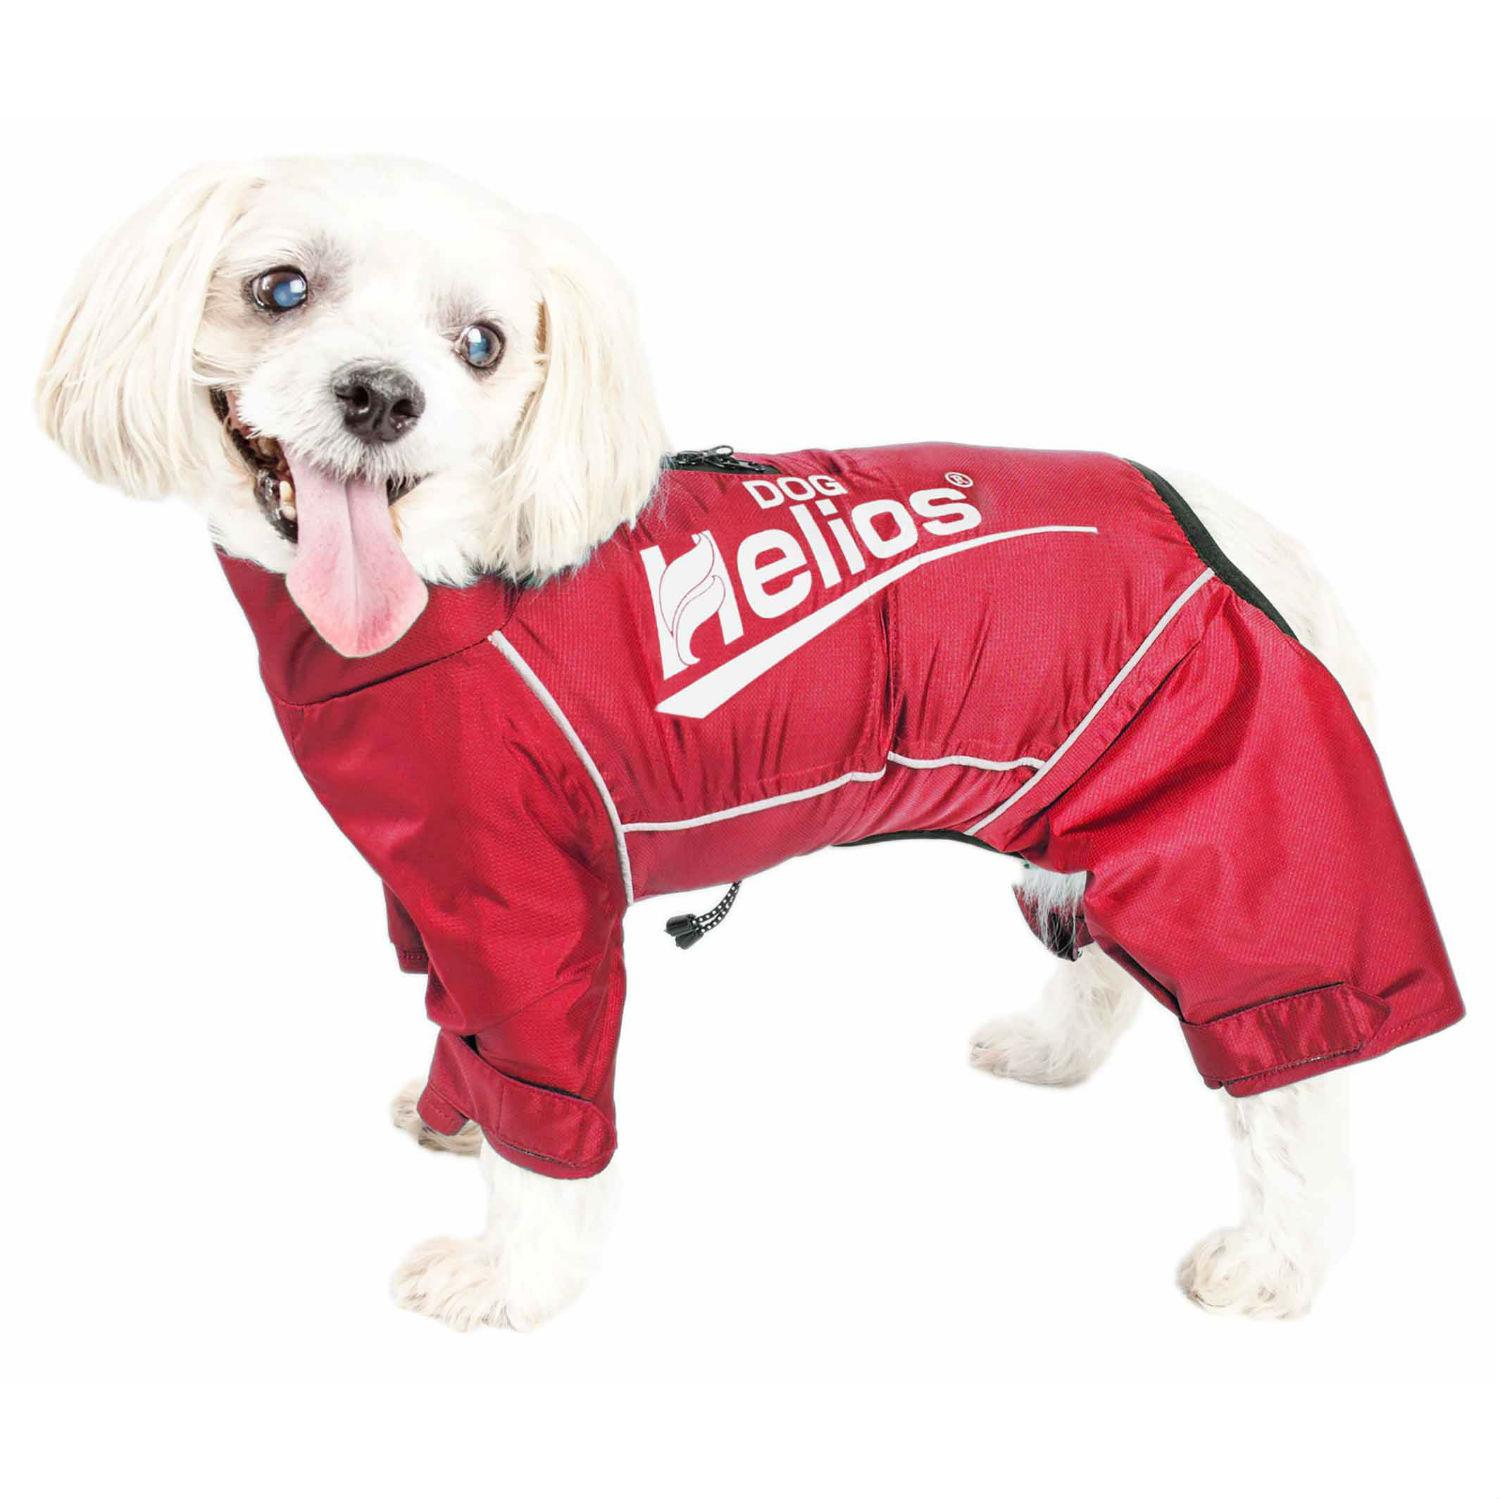 Pet Life Helios Hurricanine Full Body Dog Coat w/ Heat Reflective Technology - Sporty Red